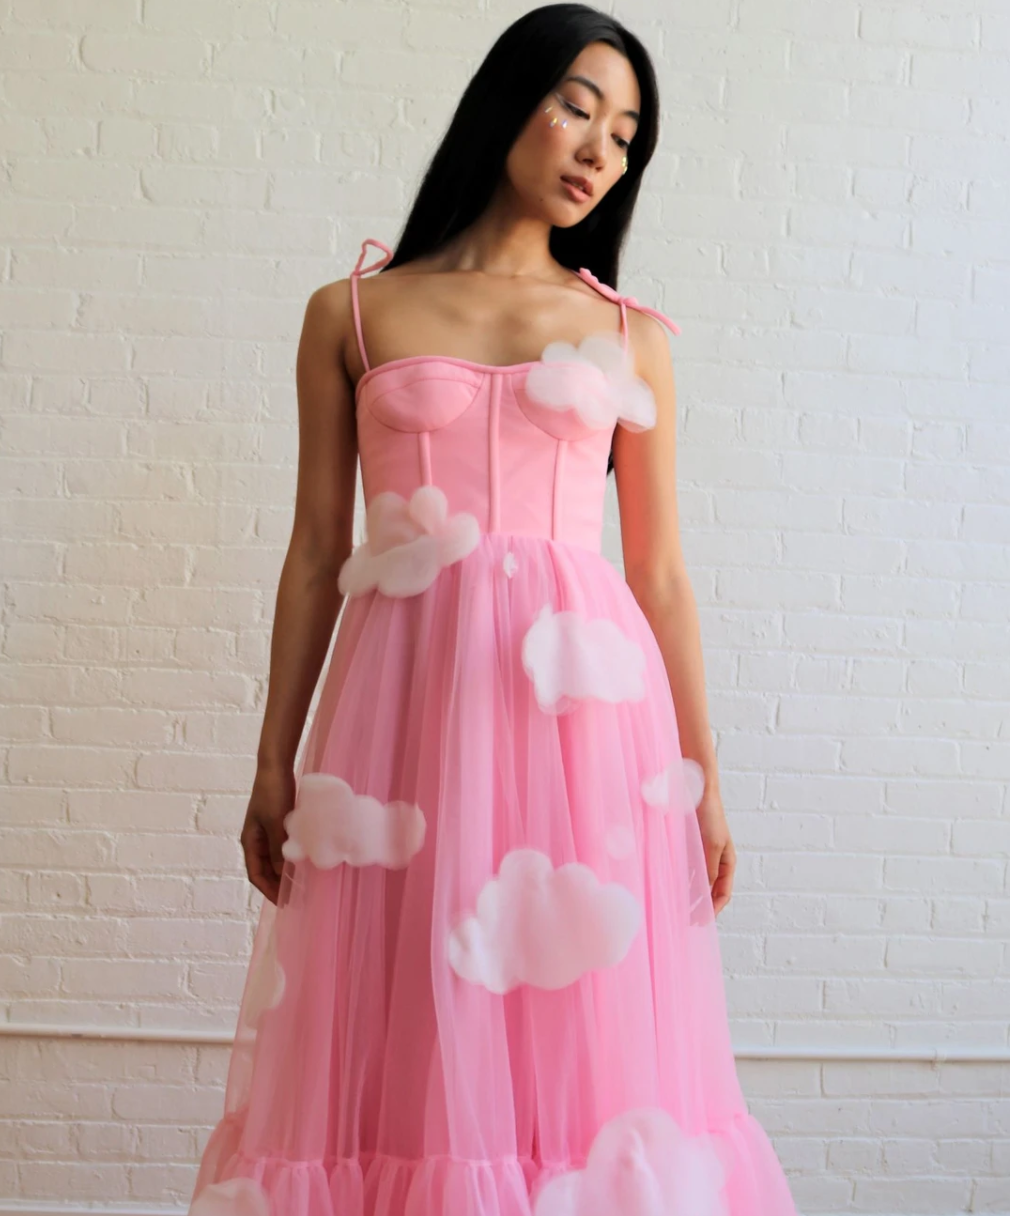 Fashion Designer Uses Cinderella As Inspiration For Dazzling New Dress ...